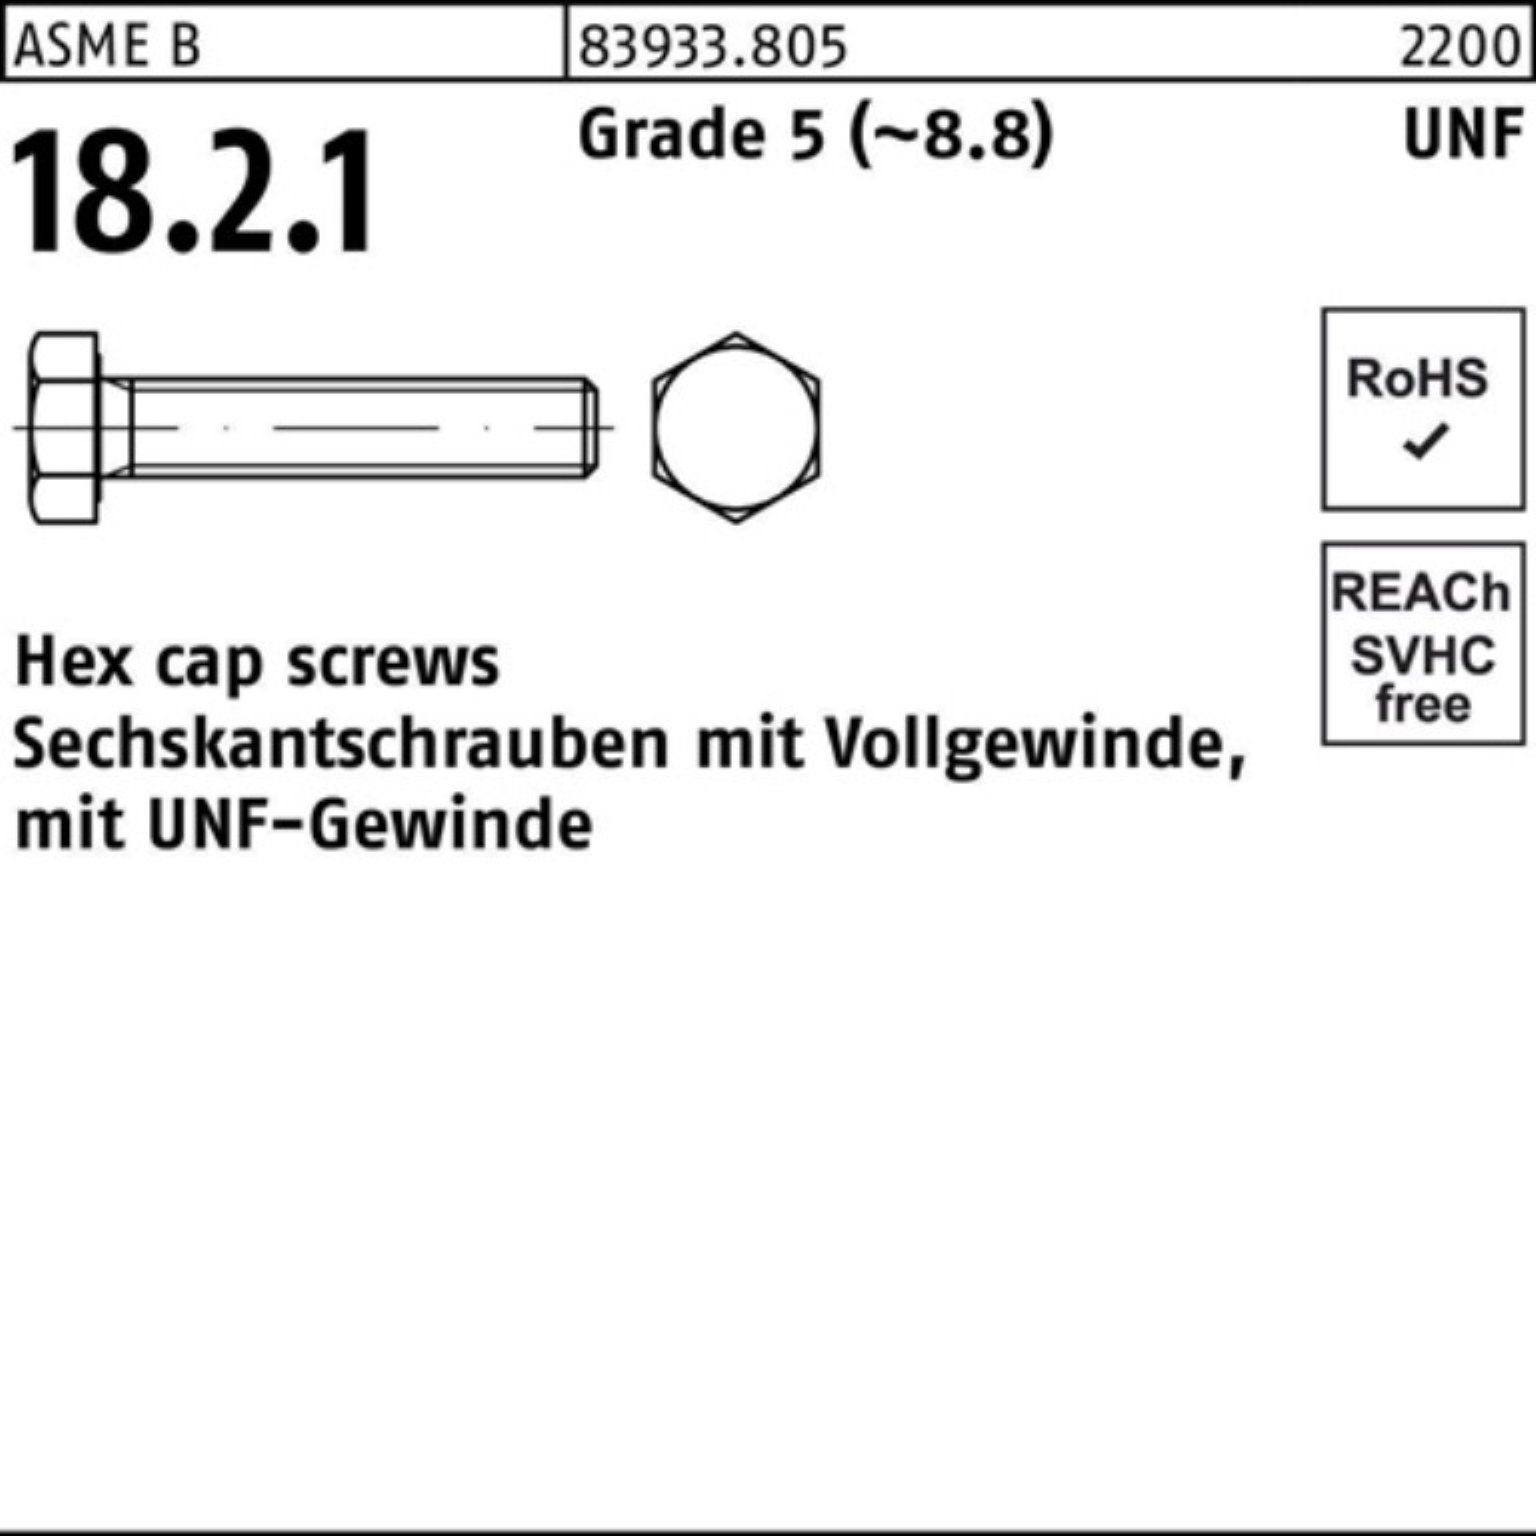 Reyher Sechskantschraube 100er Pack Sechskantschraube R 83933 UNF-Gewinde VG 5/16x 1/2 Grade 5